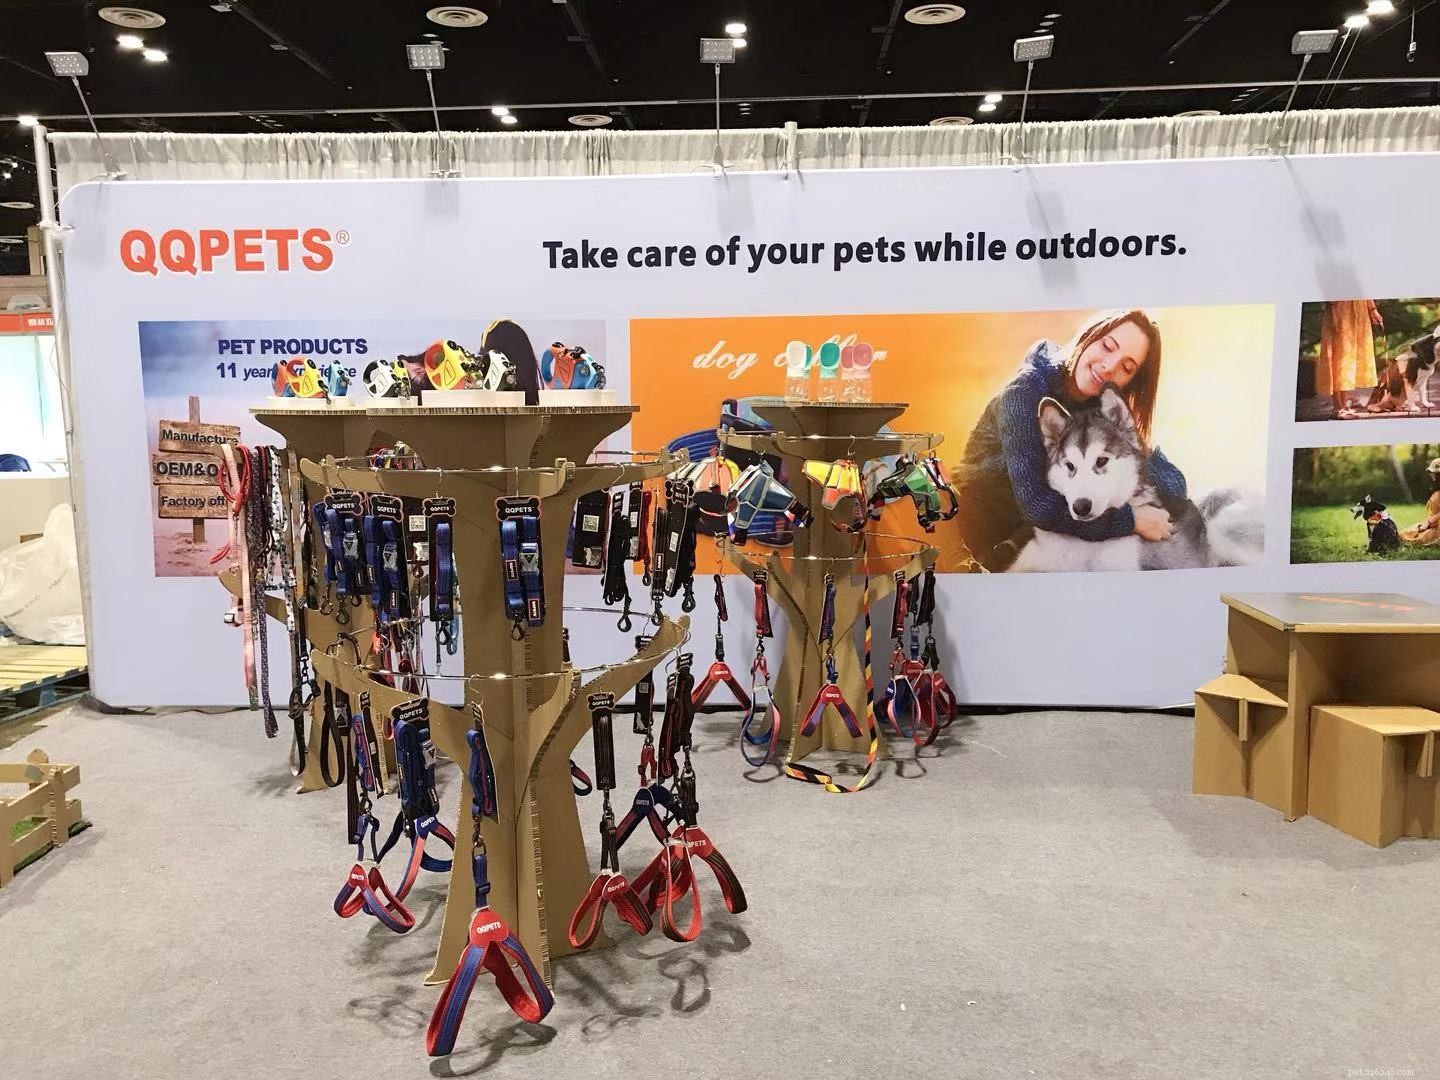 QQPETS가 Orlando GLOBAL PET EXPO 2019